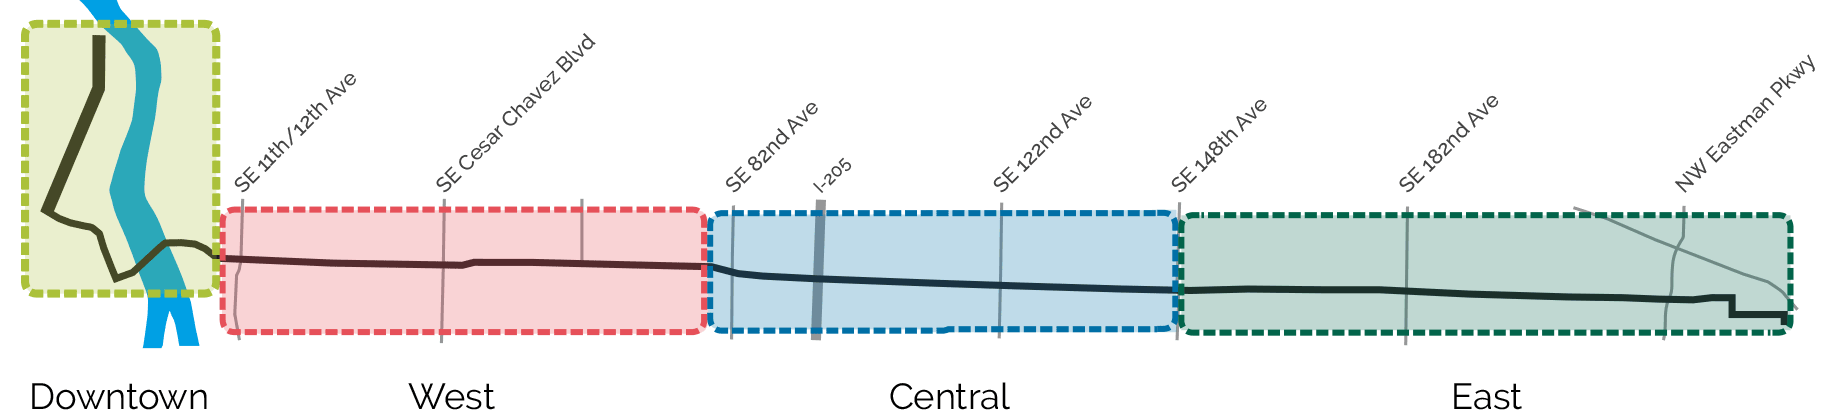 Map of alignment segments